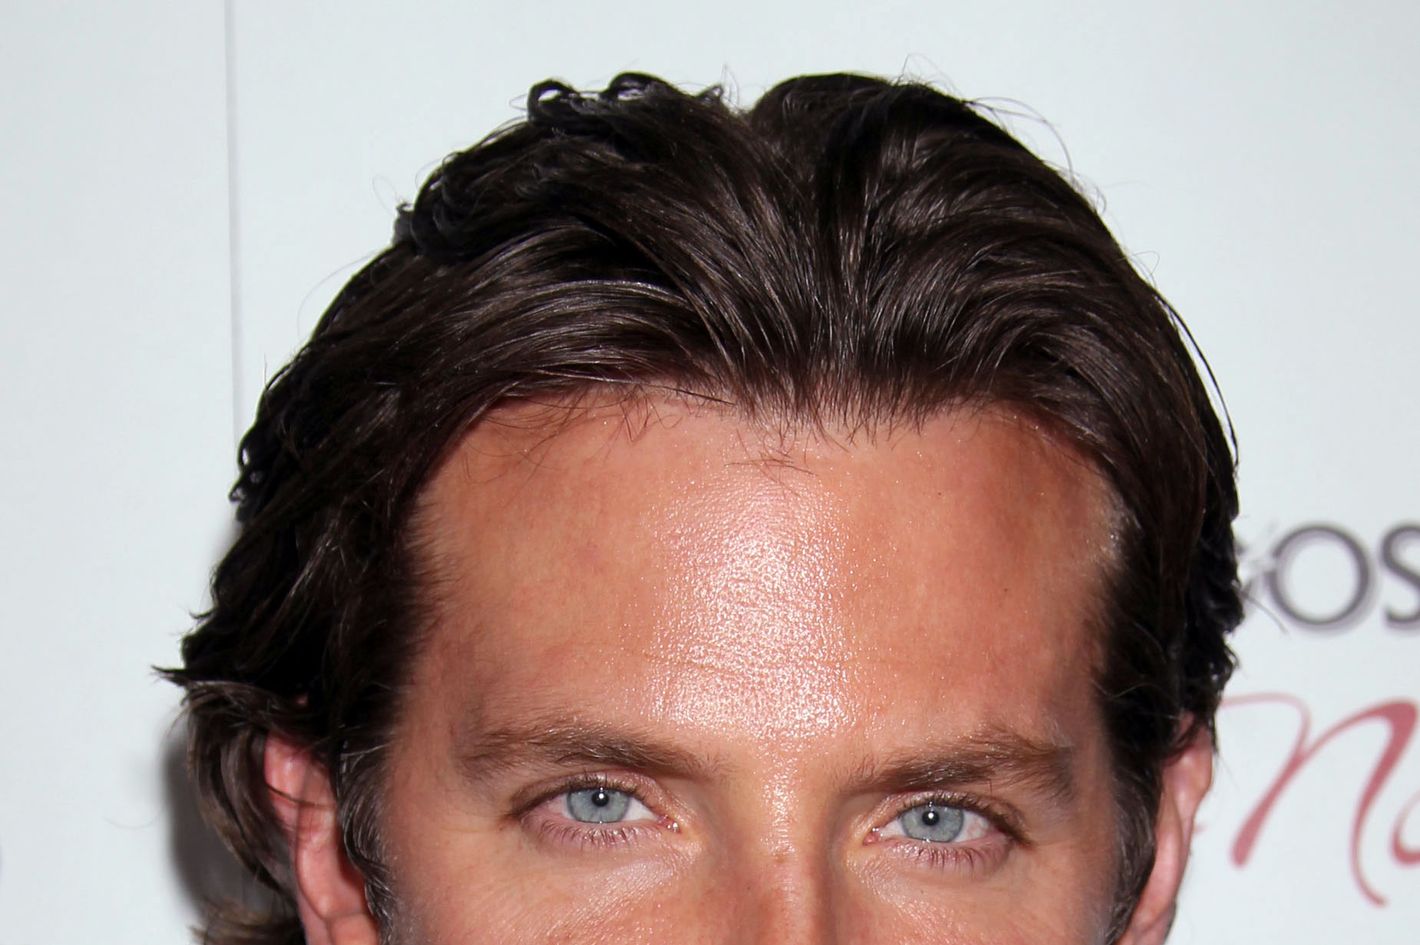 Top 13 Celebrity Facial Hair Styles Transformations | MensHaircuts.com